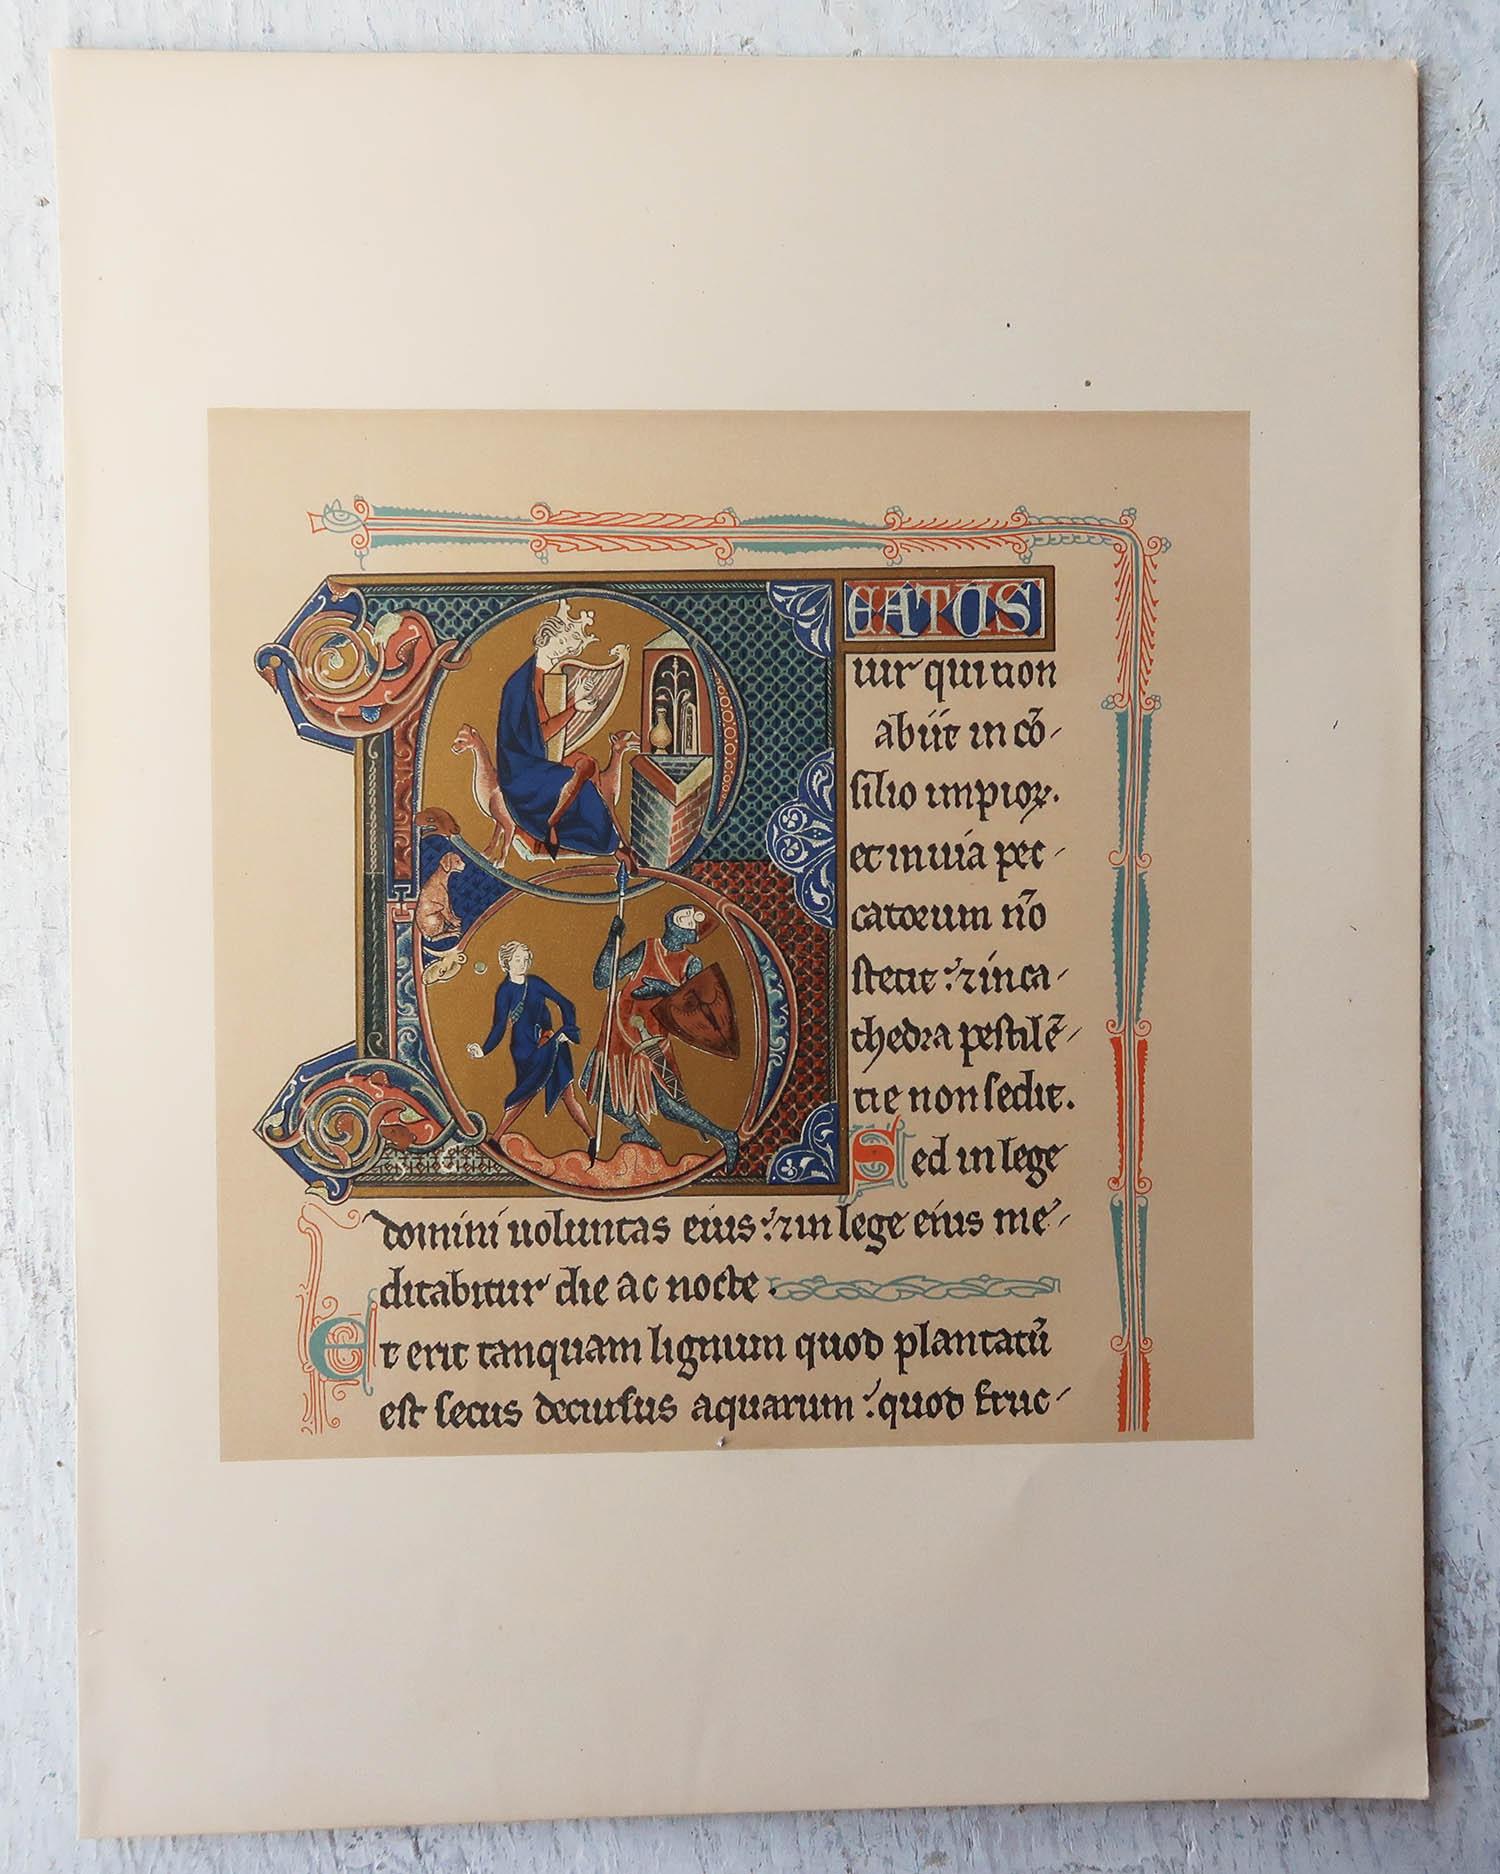 English Original Antique Print of a 13th Century Illumination, circa 1900 For Sale